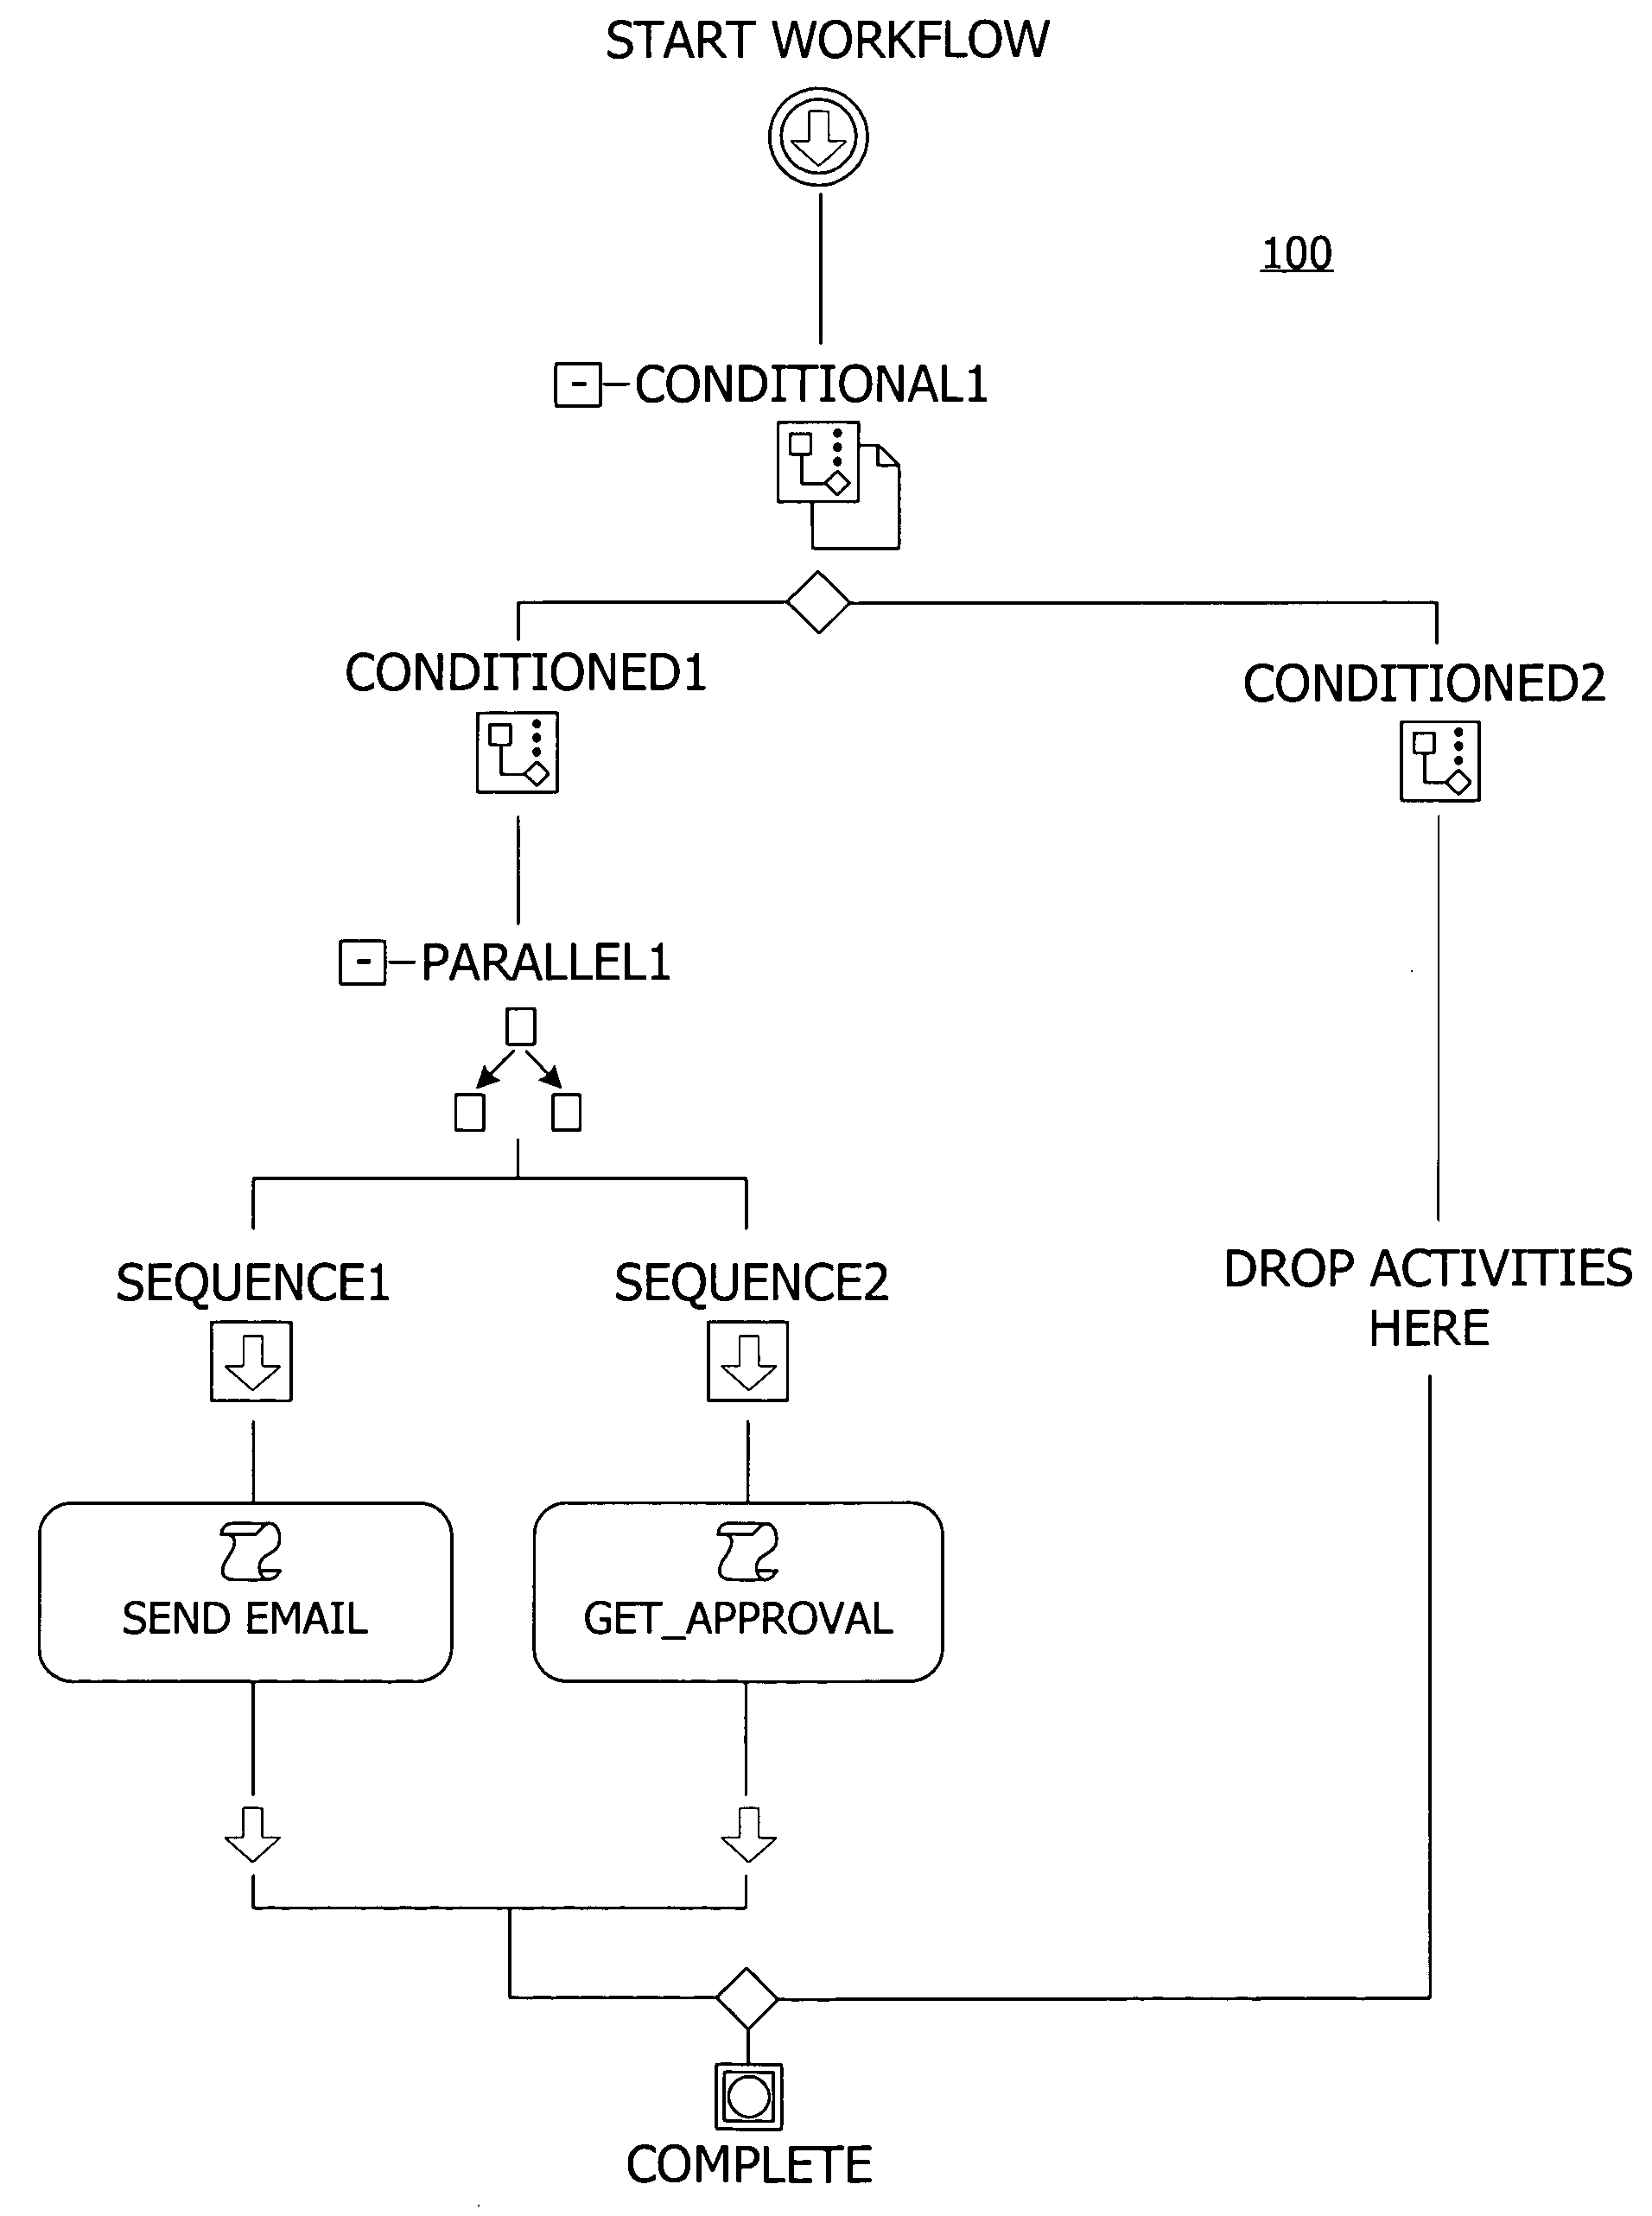 Declarative representation for an extensible workflow model